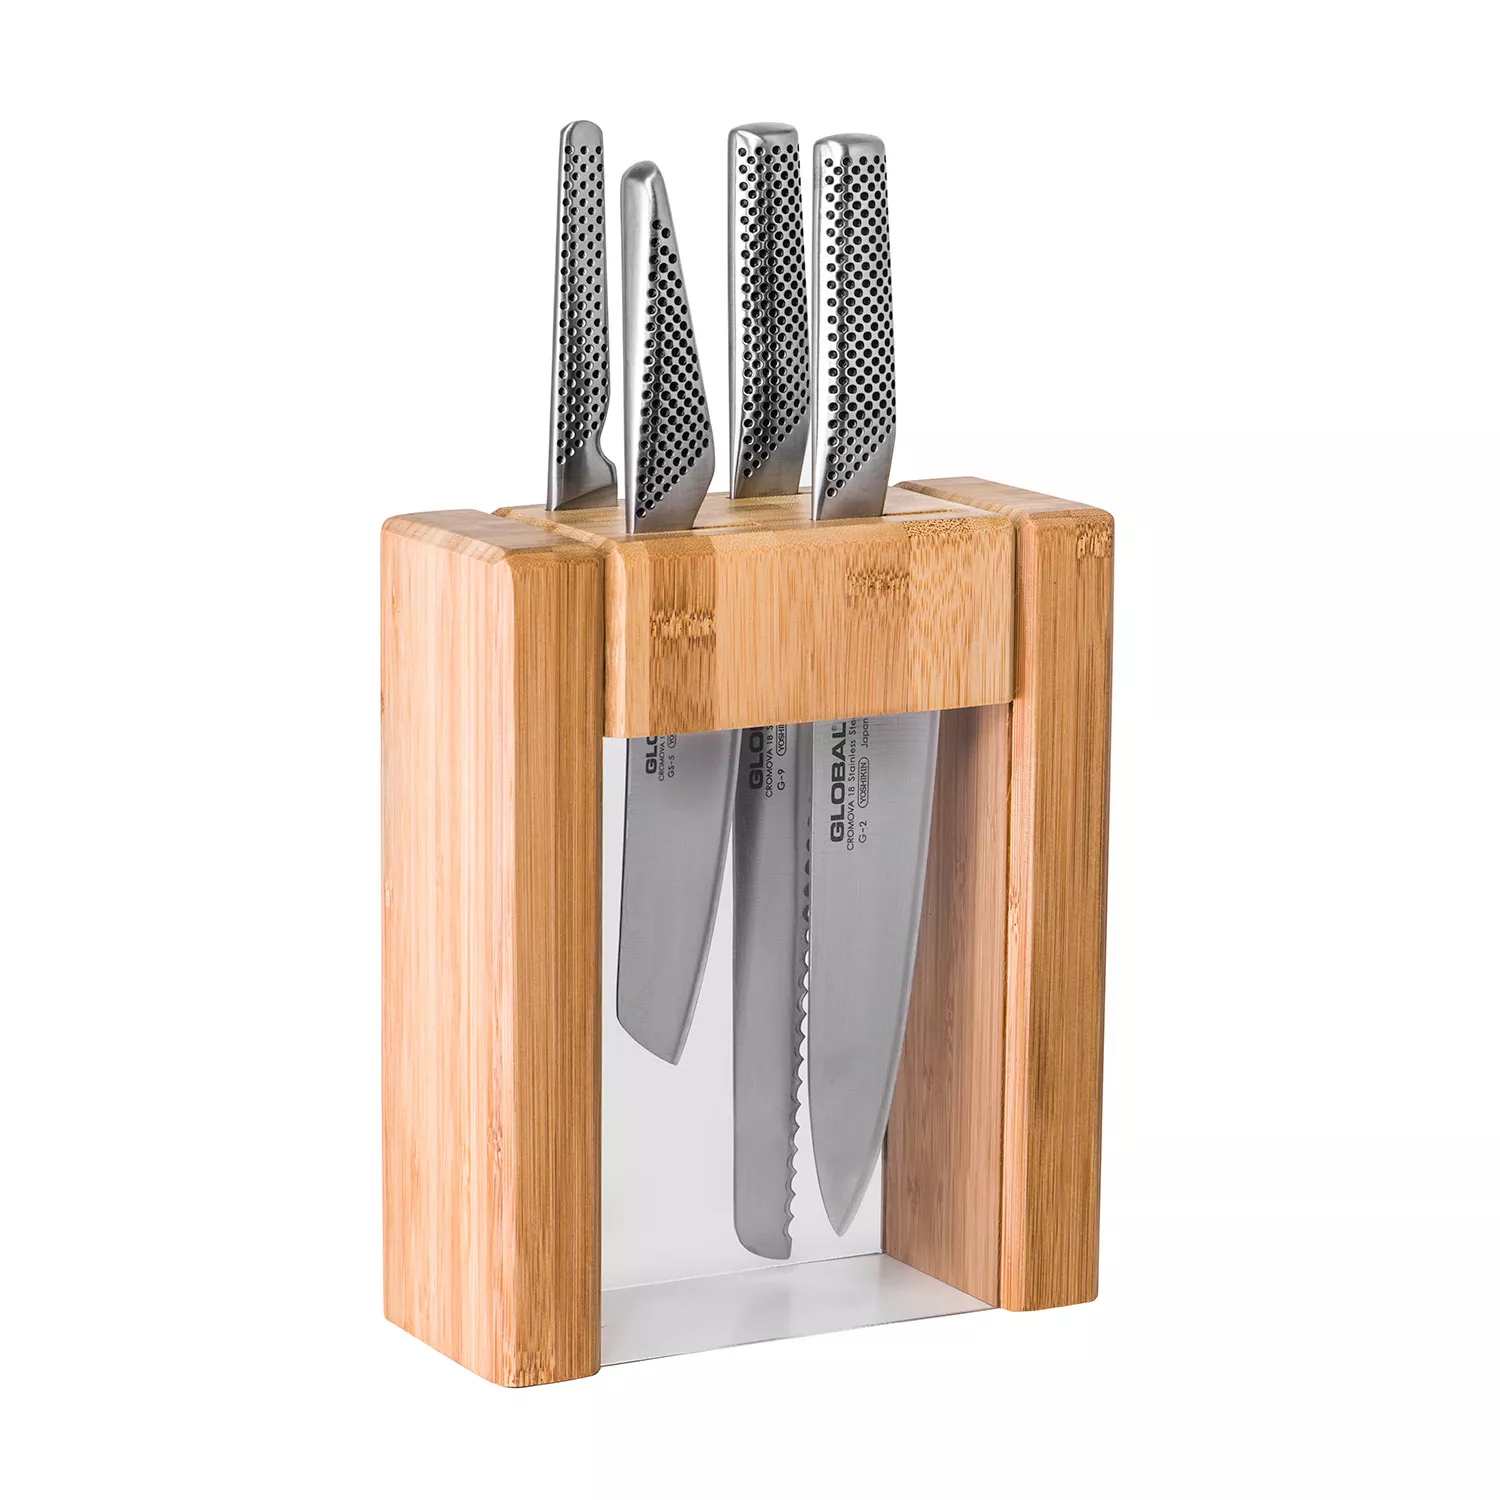 Global Classic 5-Piece Masuta Knife Wood Block Set